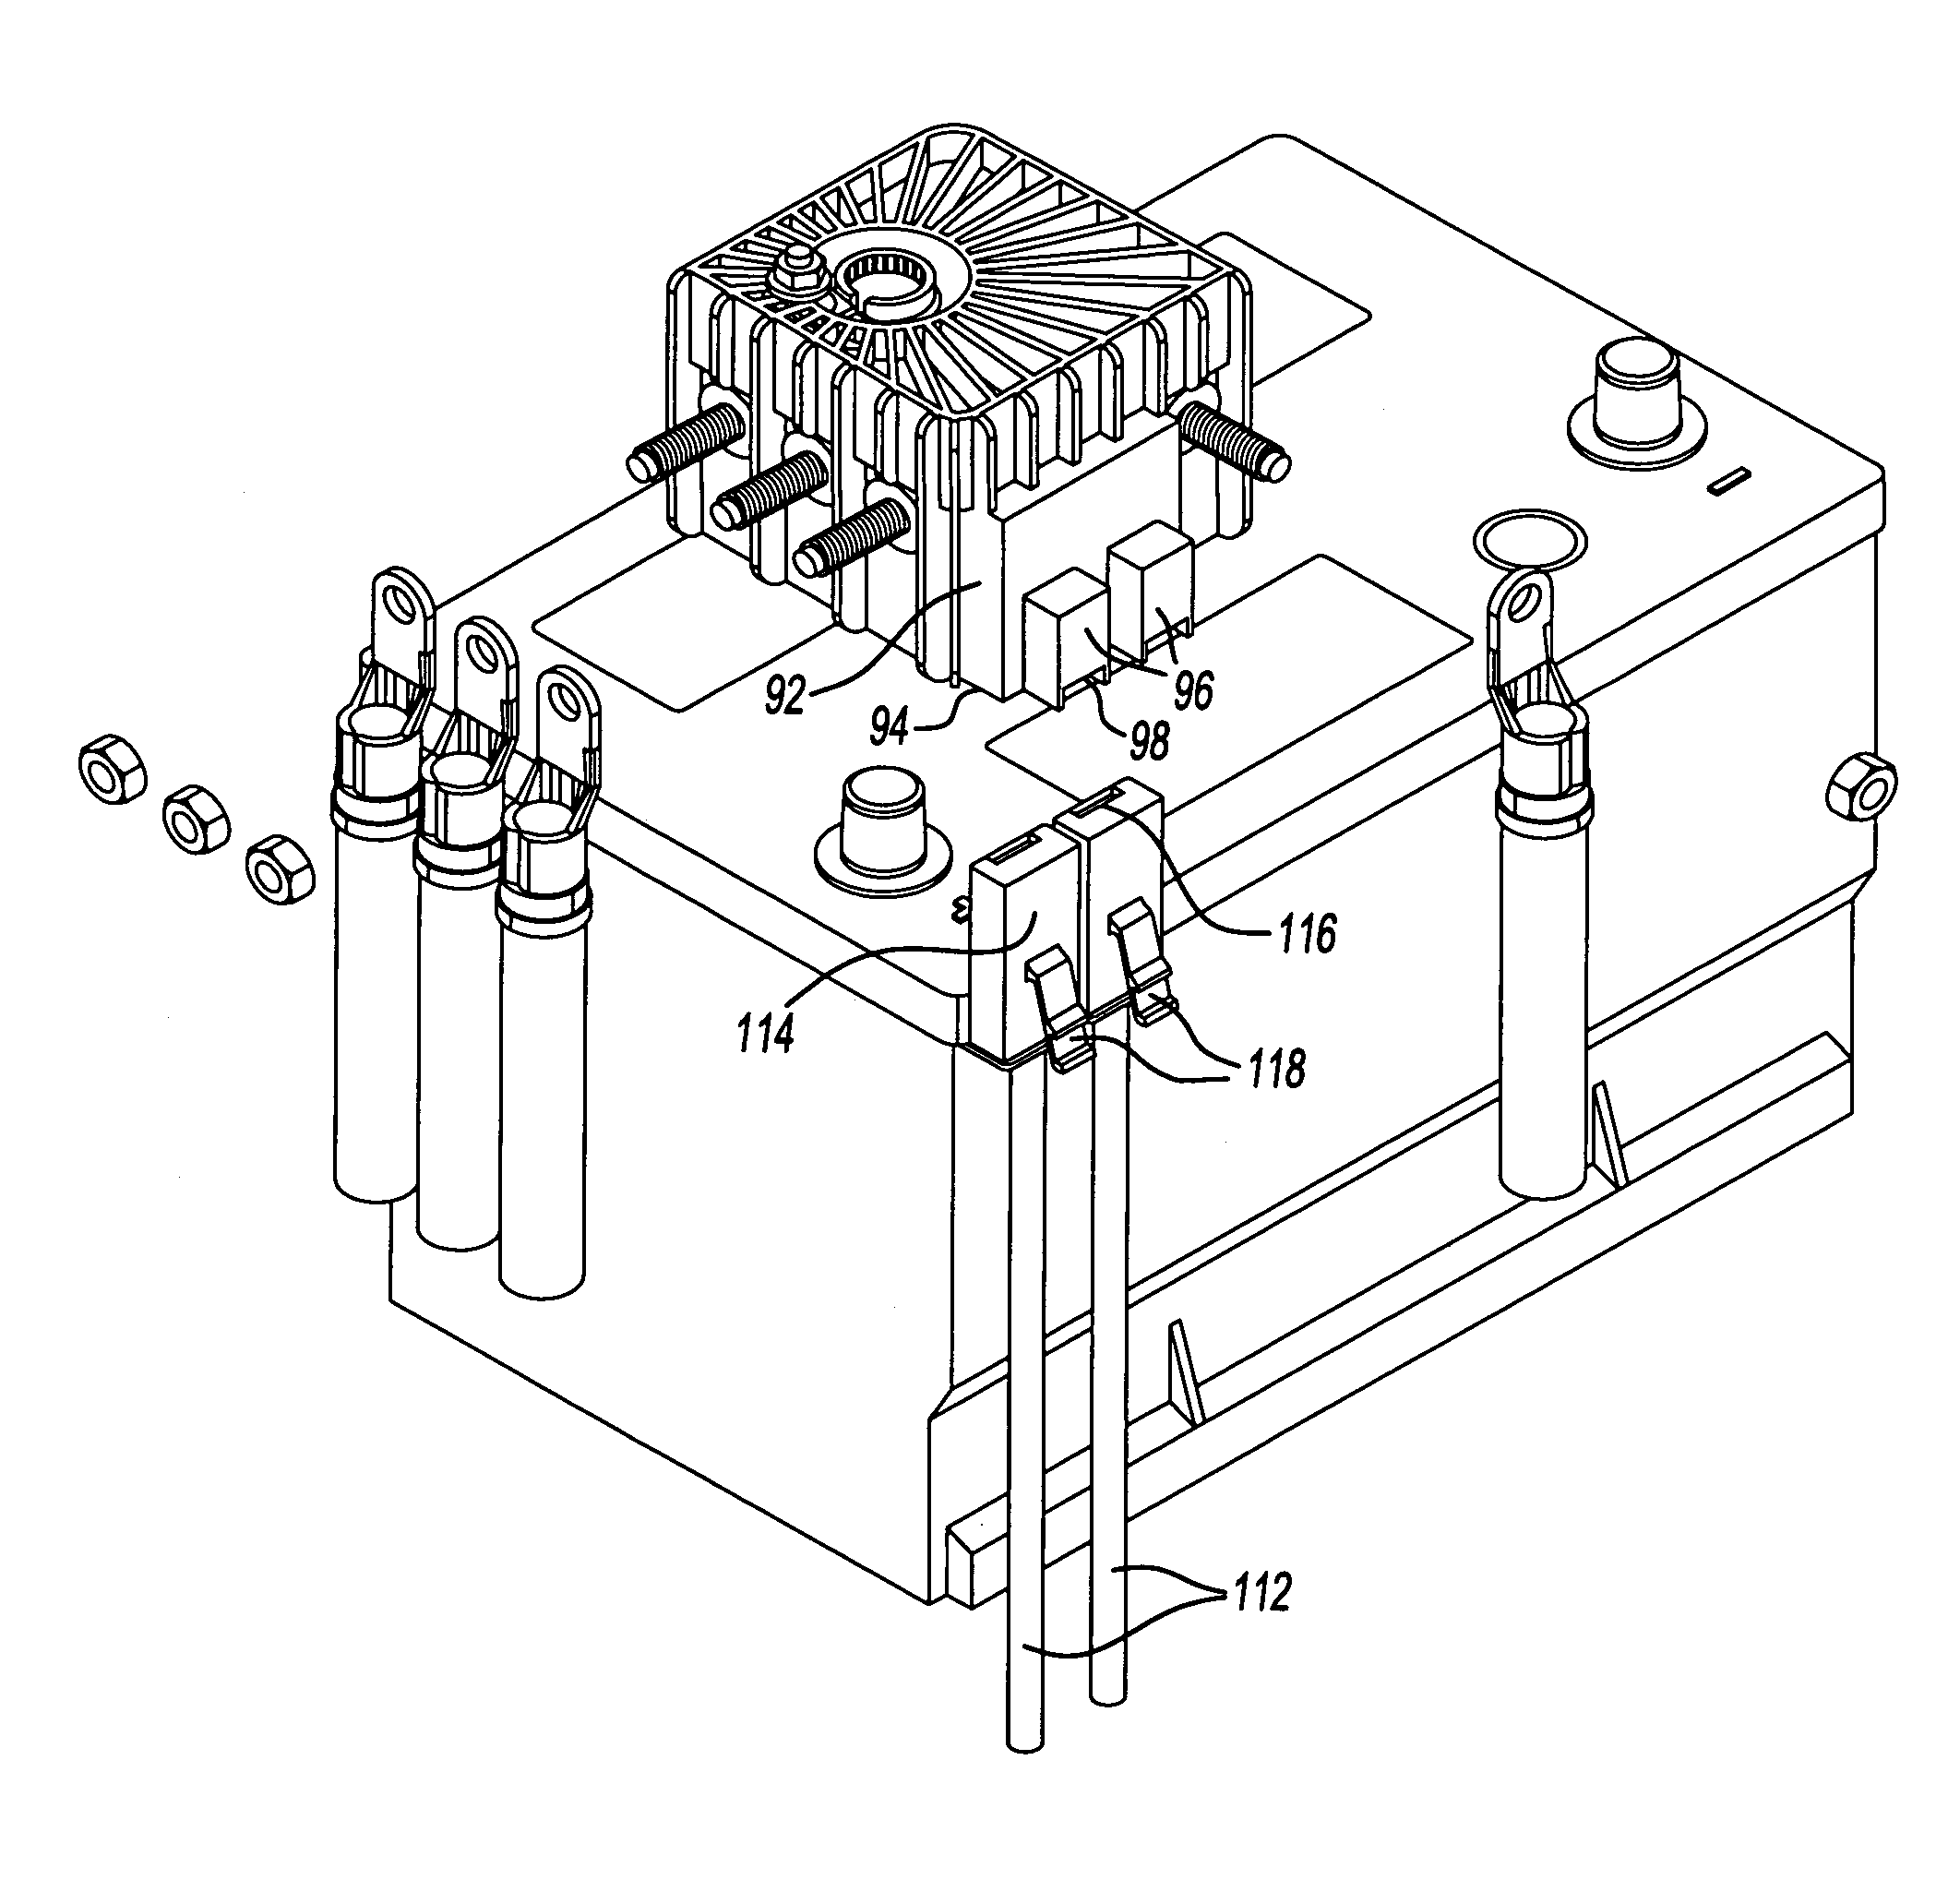 Corner-mounted battery fuse